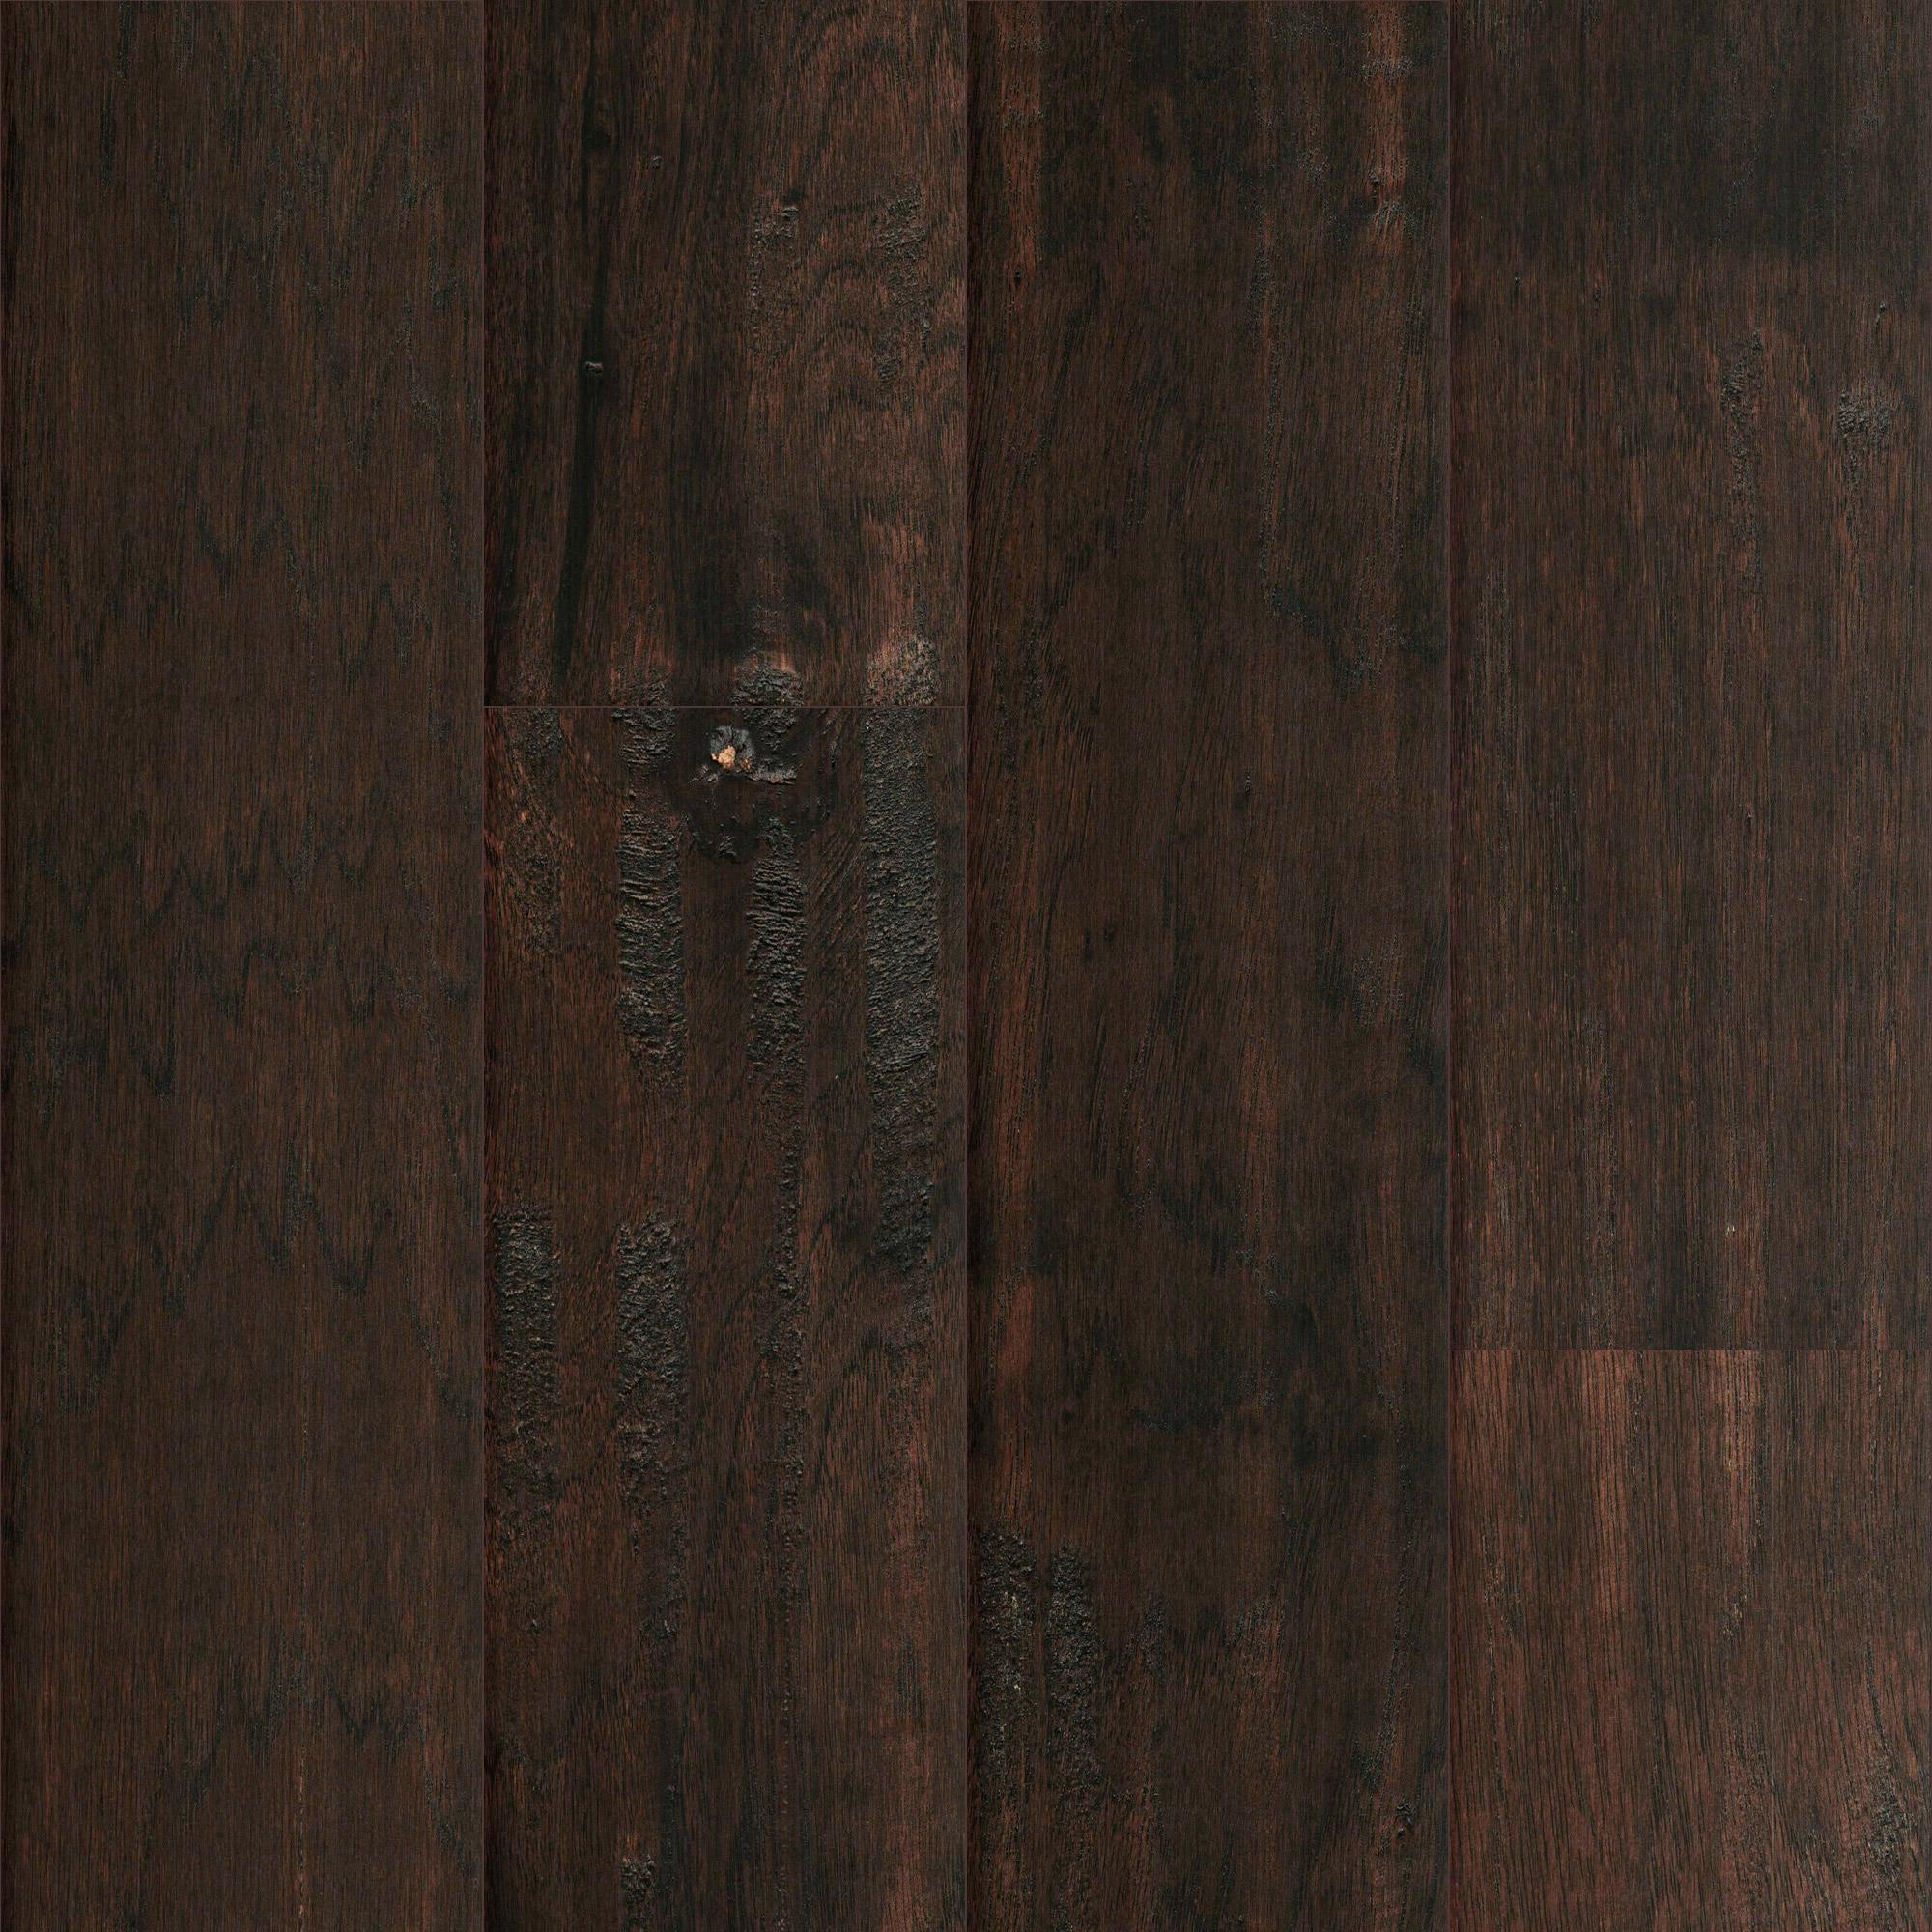 dark chocolate hardwood floors of mullican lincolnshire sculpted hickory espresso 5 engineered regarding mullican lincolnshire sculpted hickory espresso 5 engineered hardwood flooring